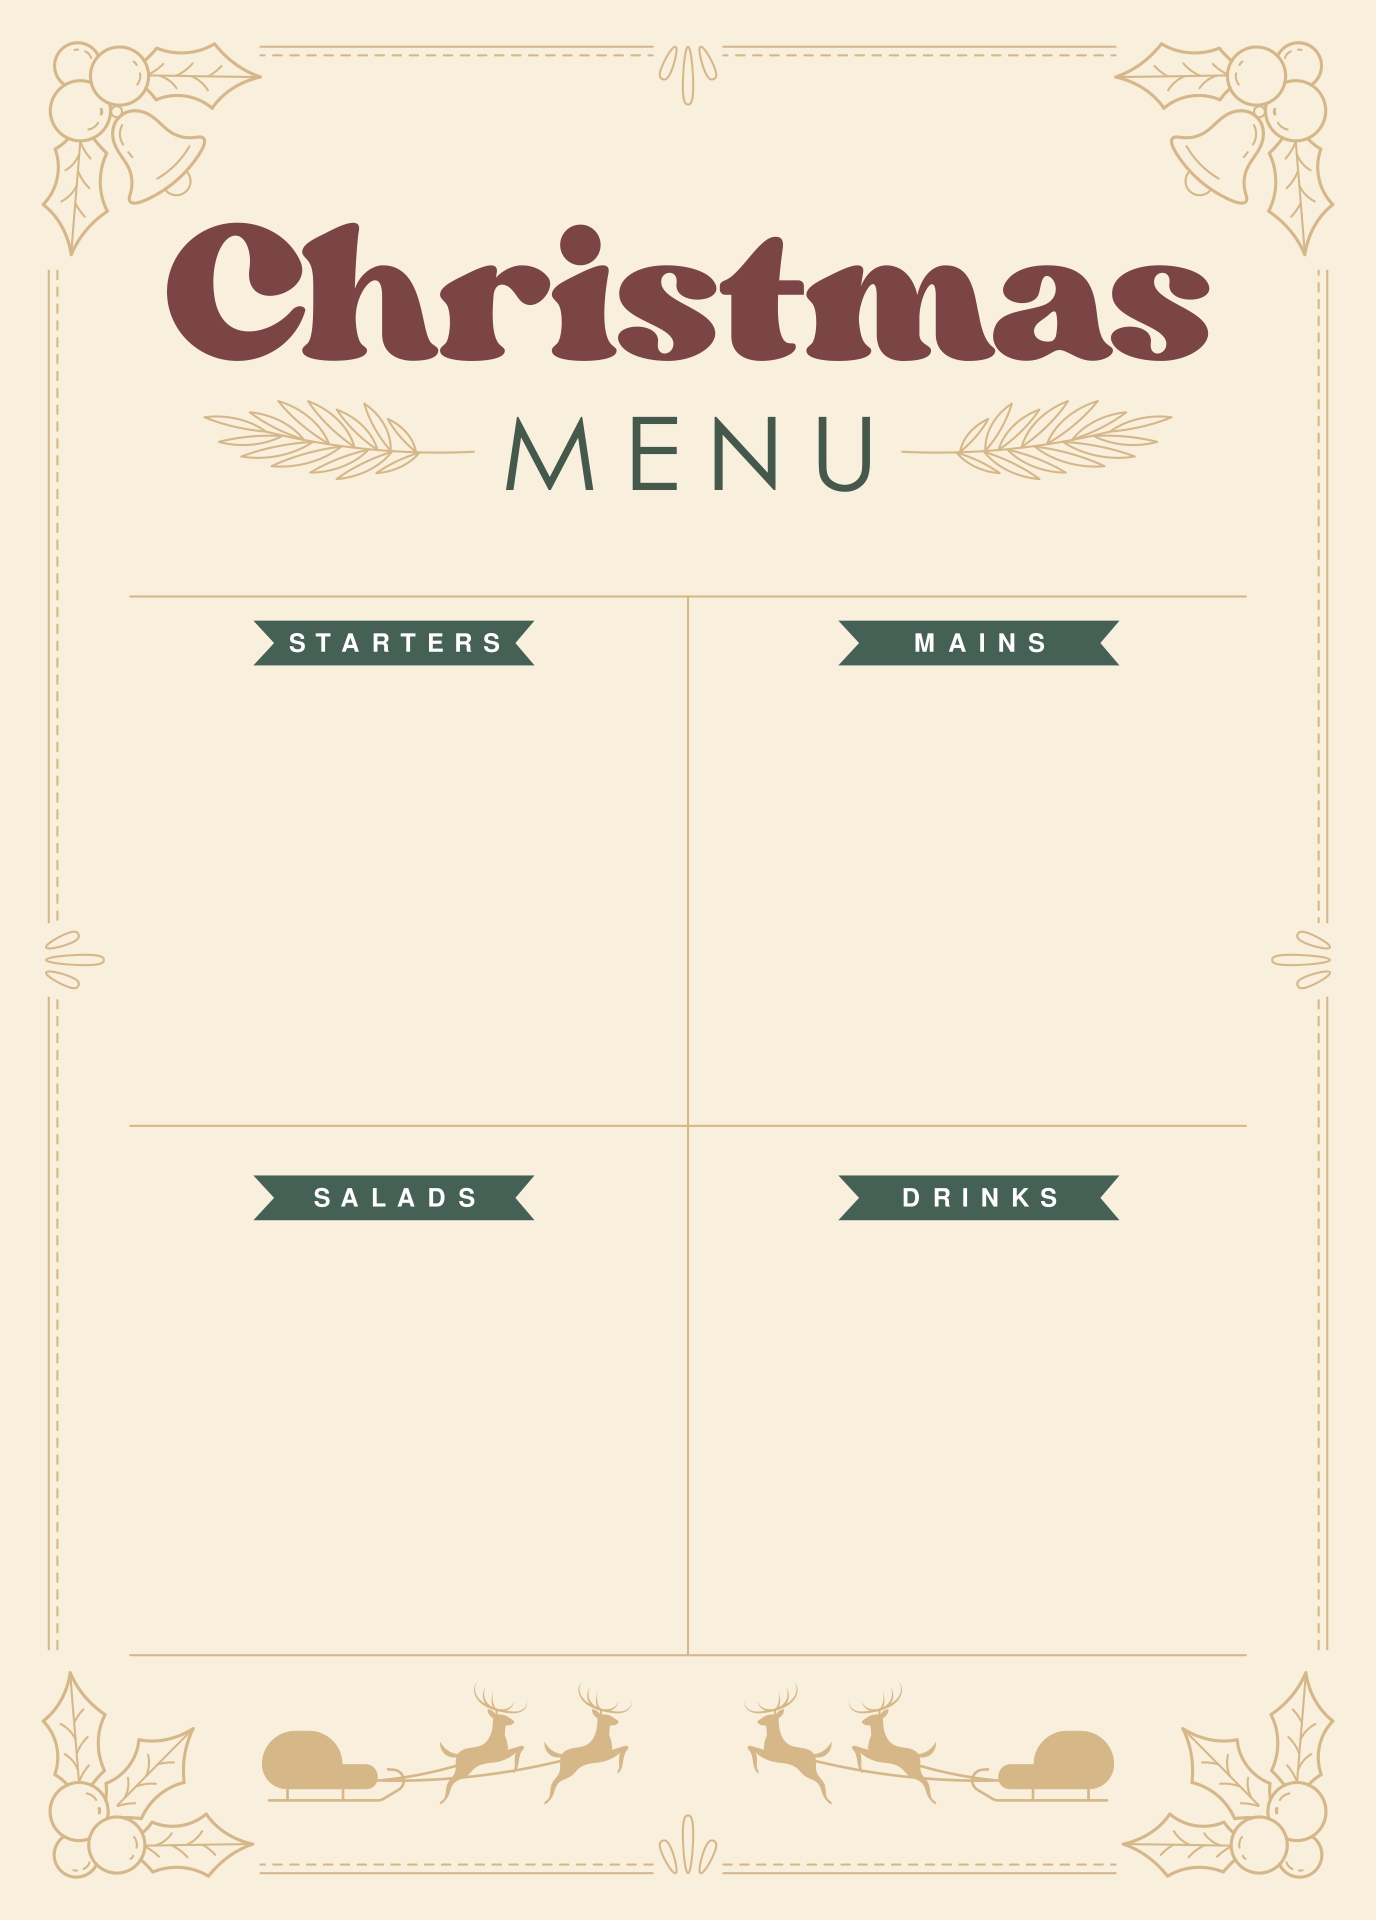 6-best-images-of-free-printable-christmas-menu-templates-christmas-menu-templates-free